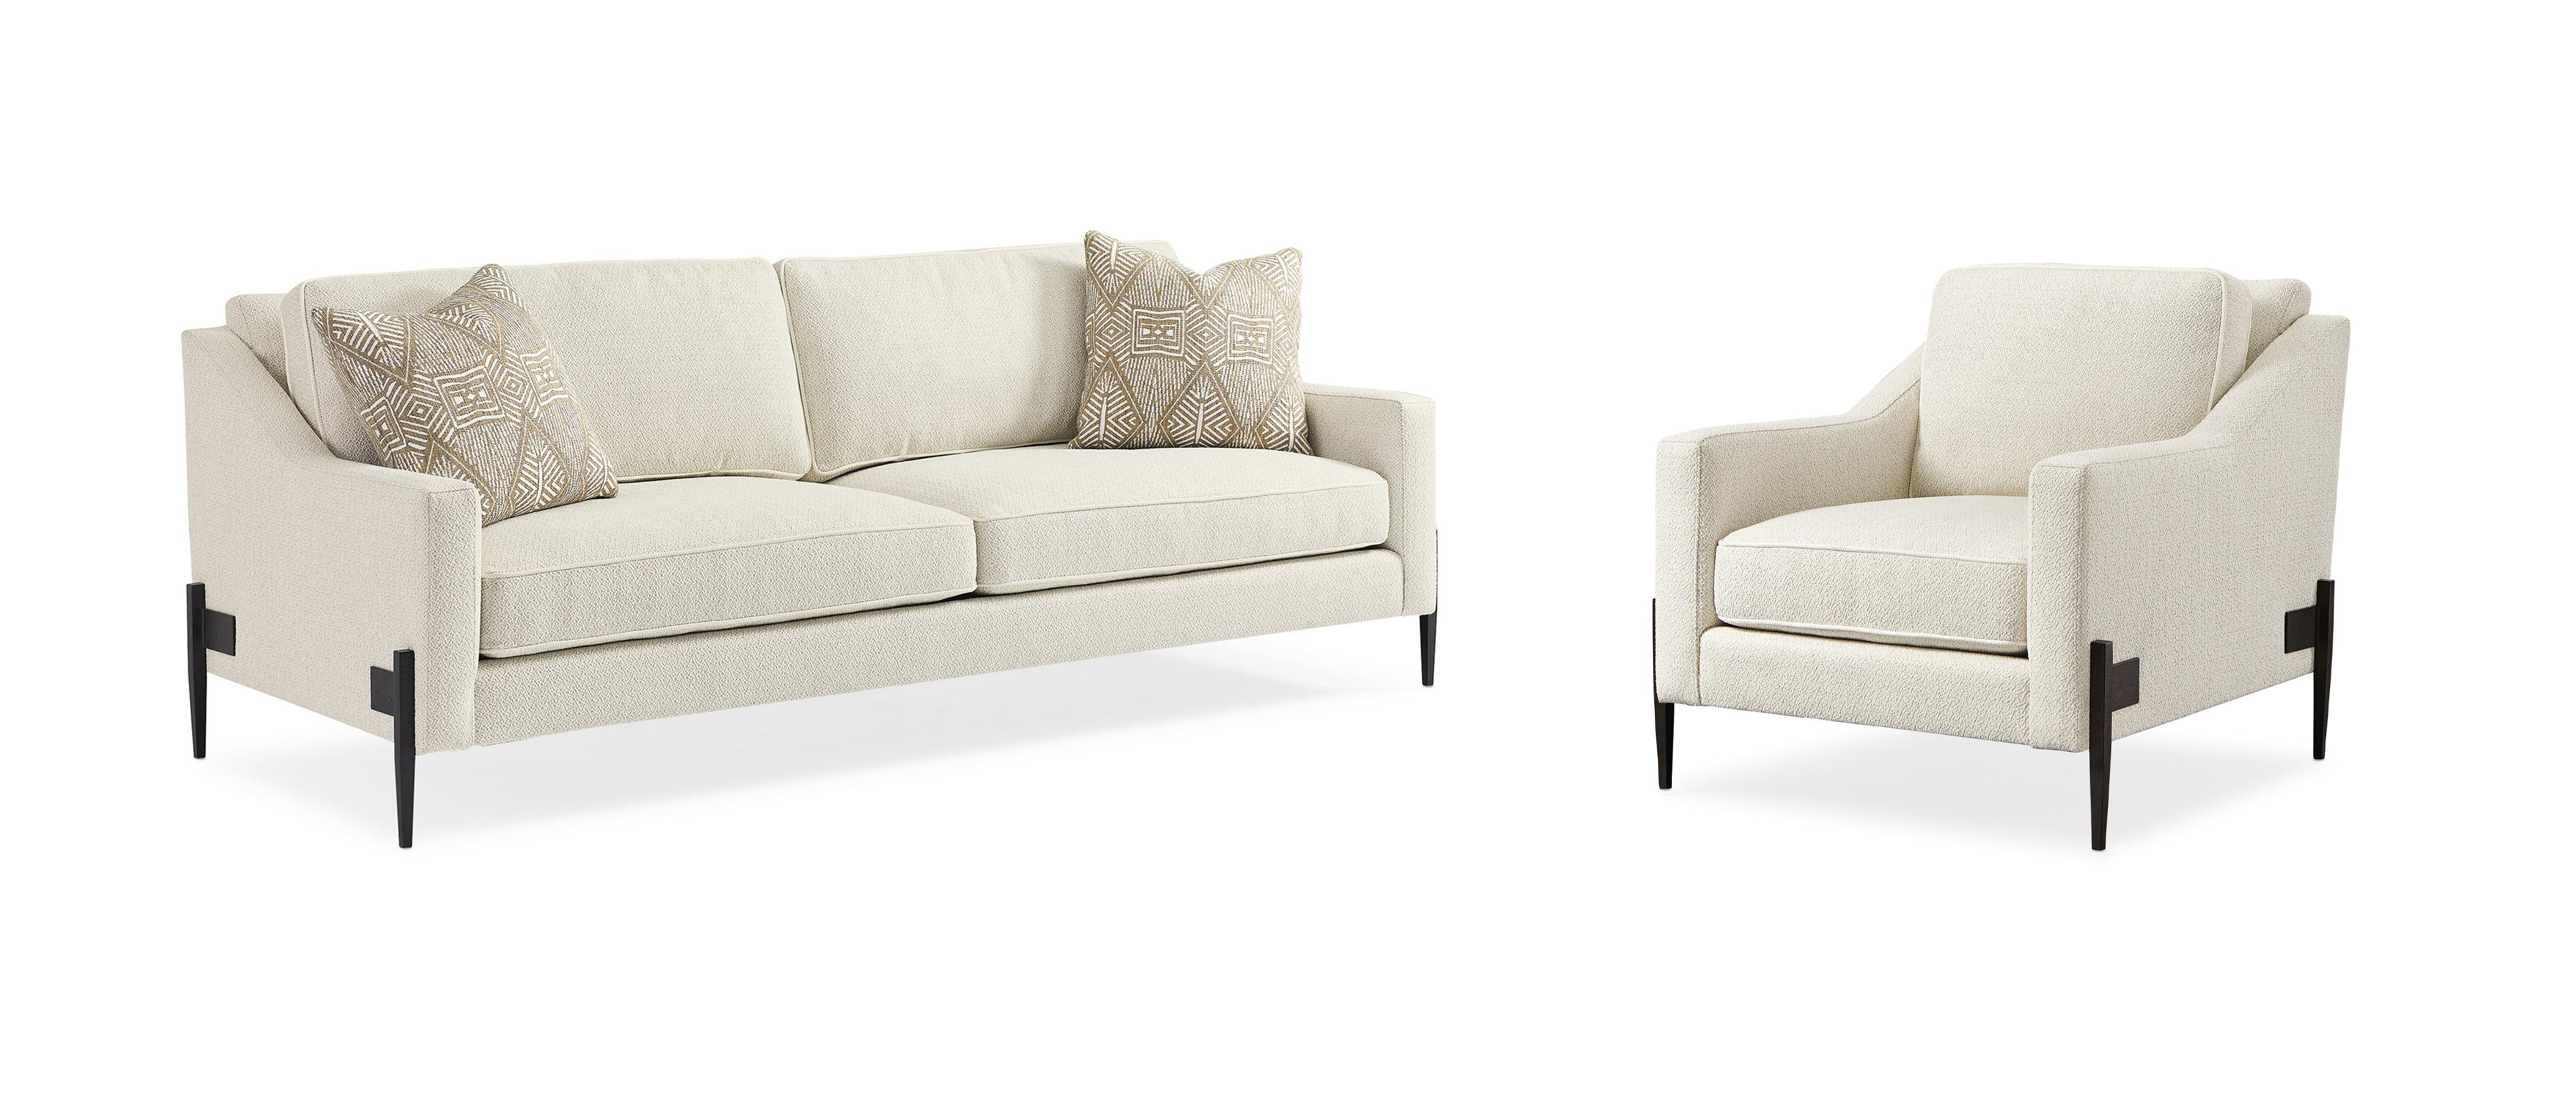 Modern Sofa and Chair REMIX SOFA M110-019-211-A-Set-2 in Cream Fabric